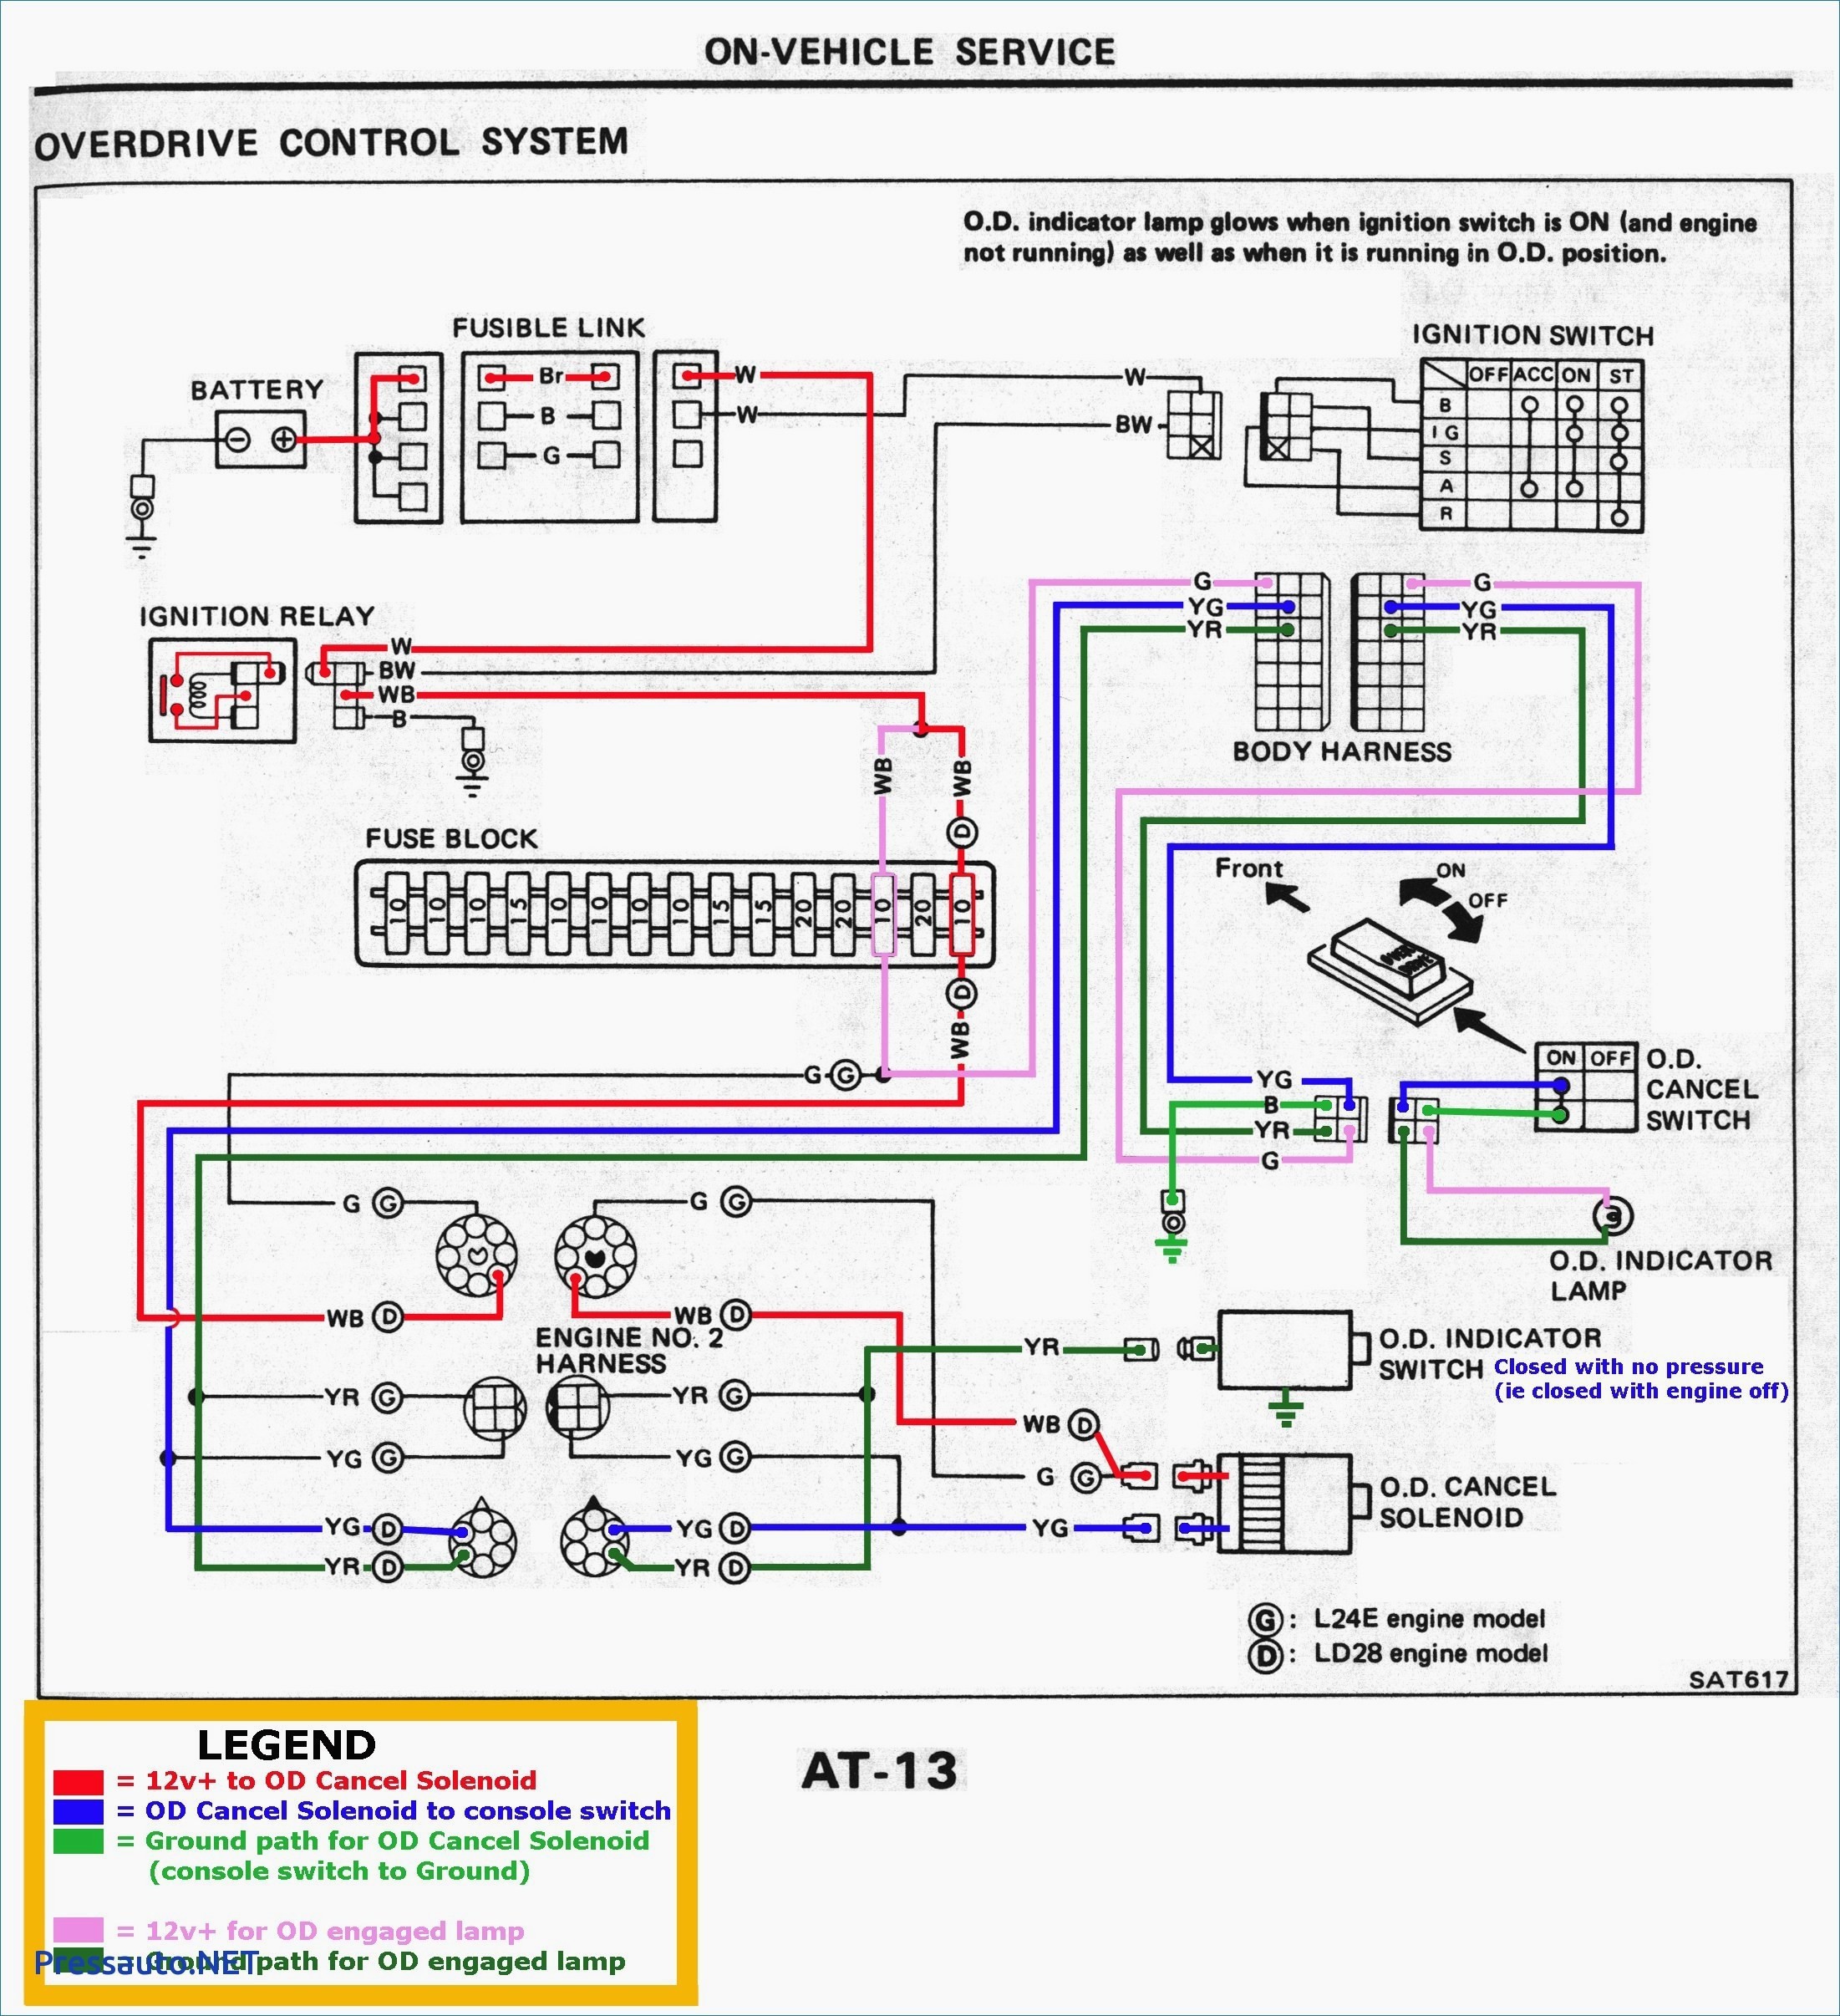 Car Audio Connection Diagram 2001 Kia Sephia Radio Wiring Diagram 2018 Wiring Diagram for Of Car Audio Connection Diagram